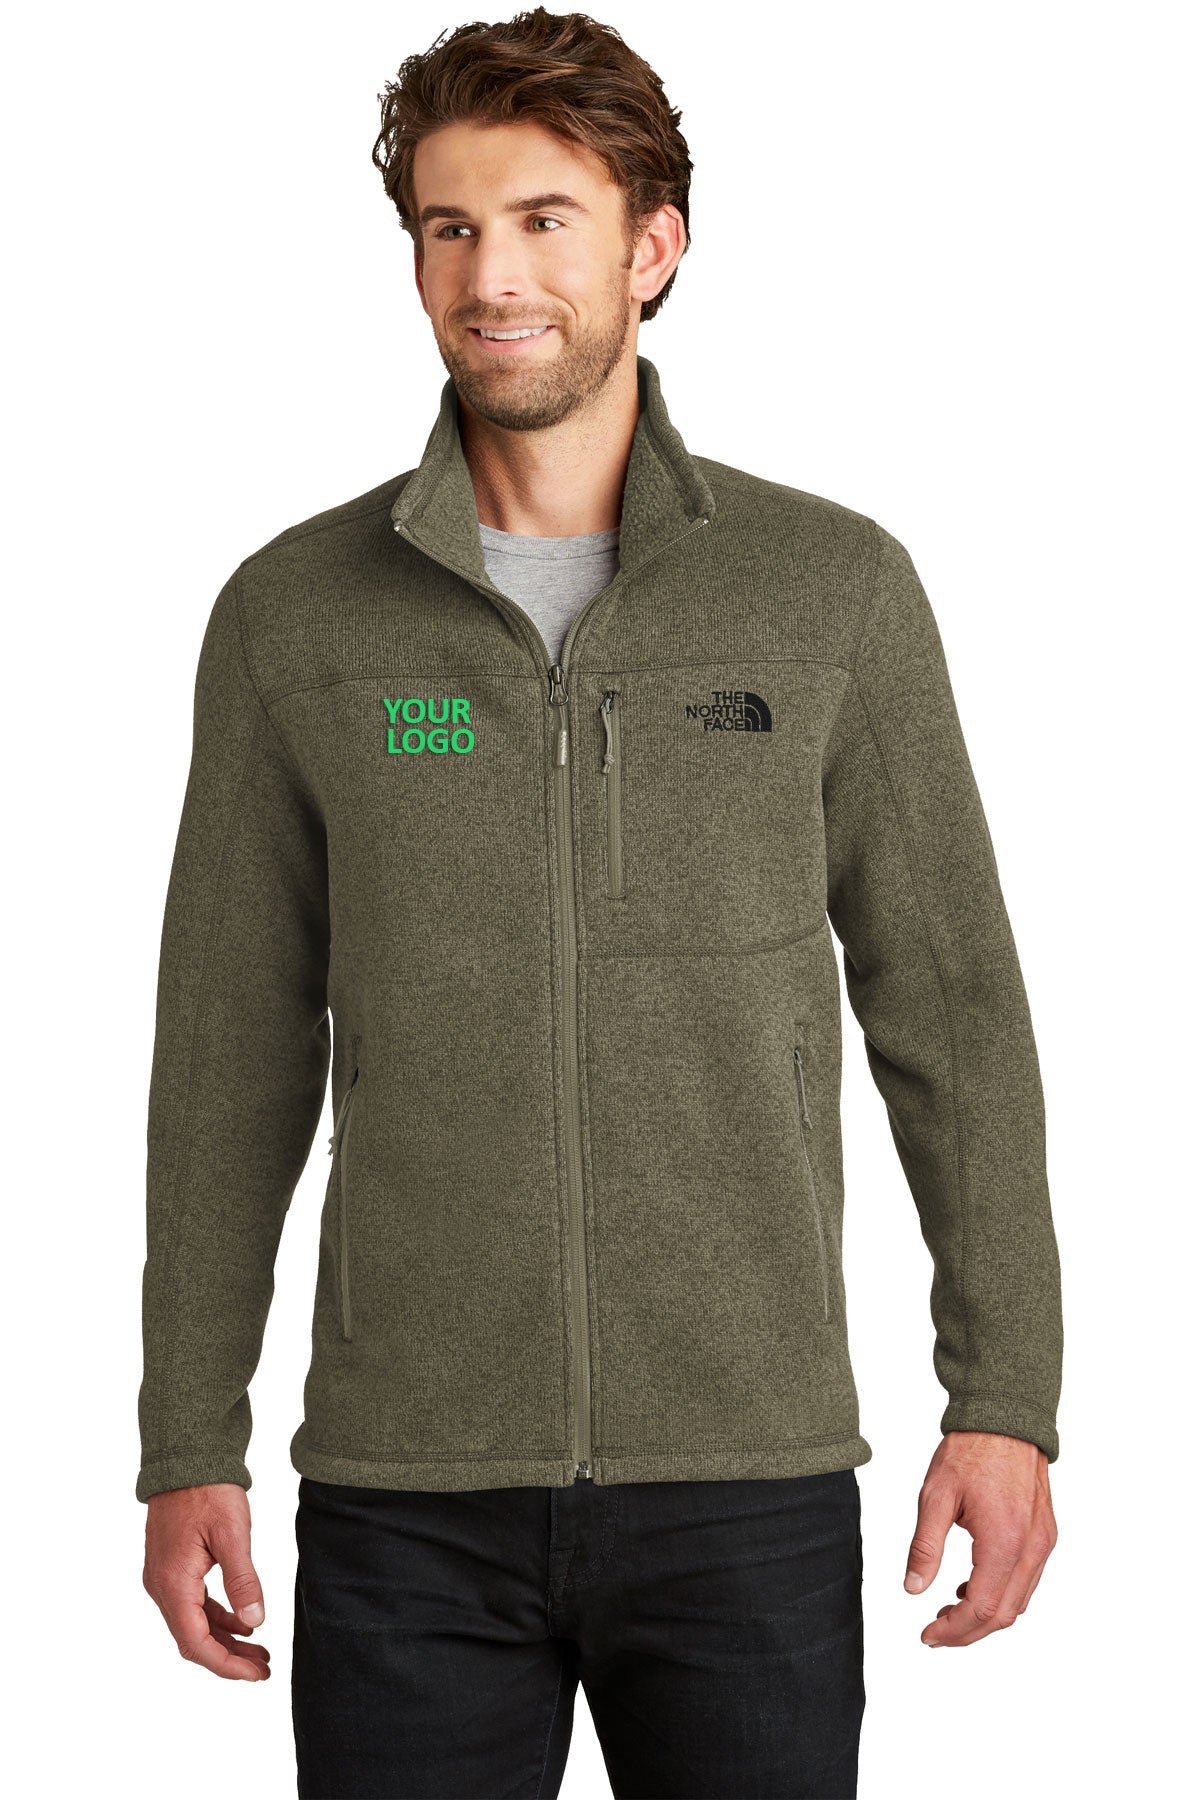 Custom North Face Sweater Fleece Jacket New Taupe Green Heather